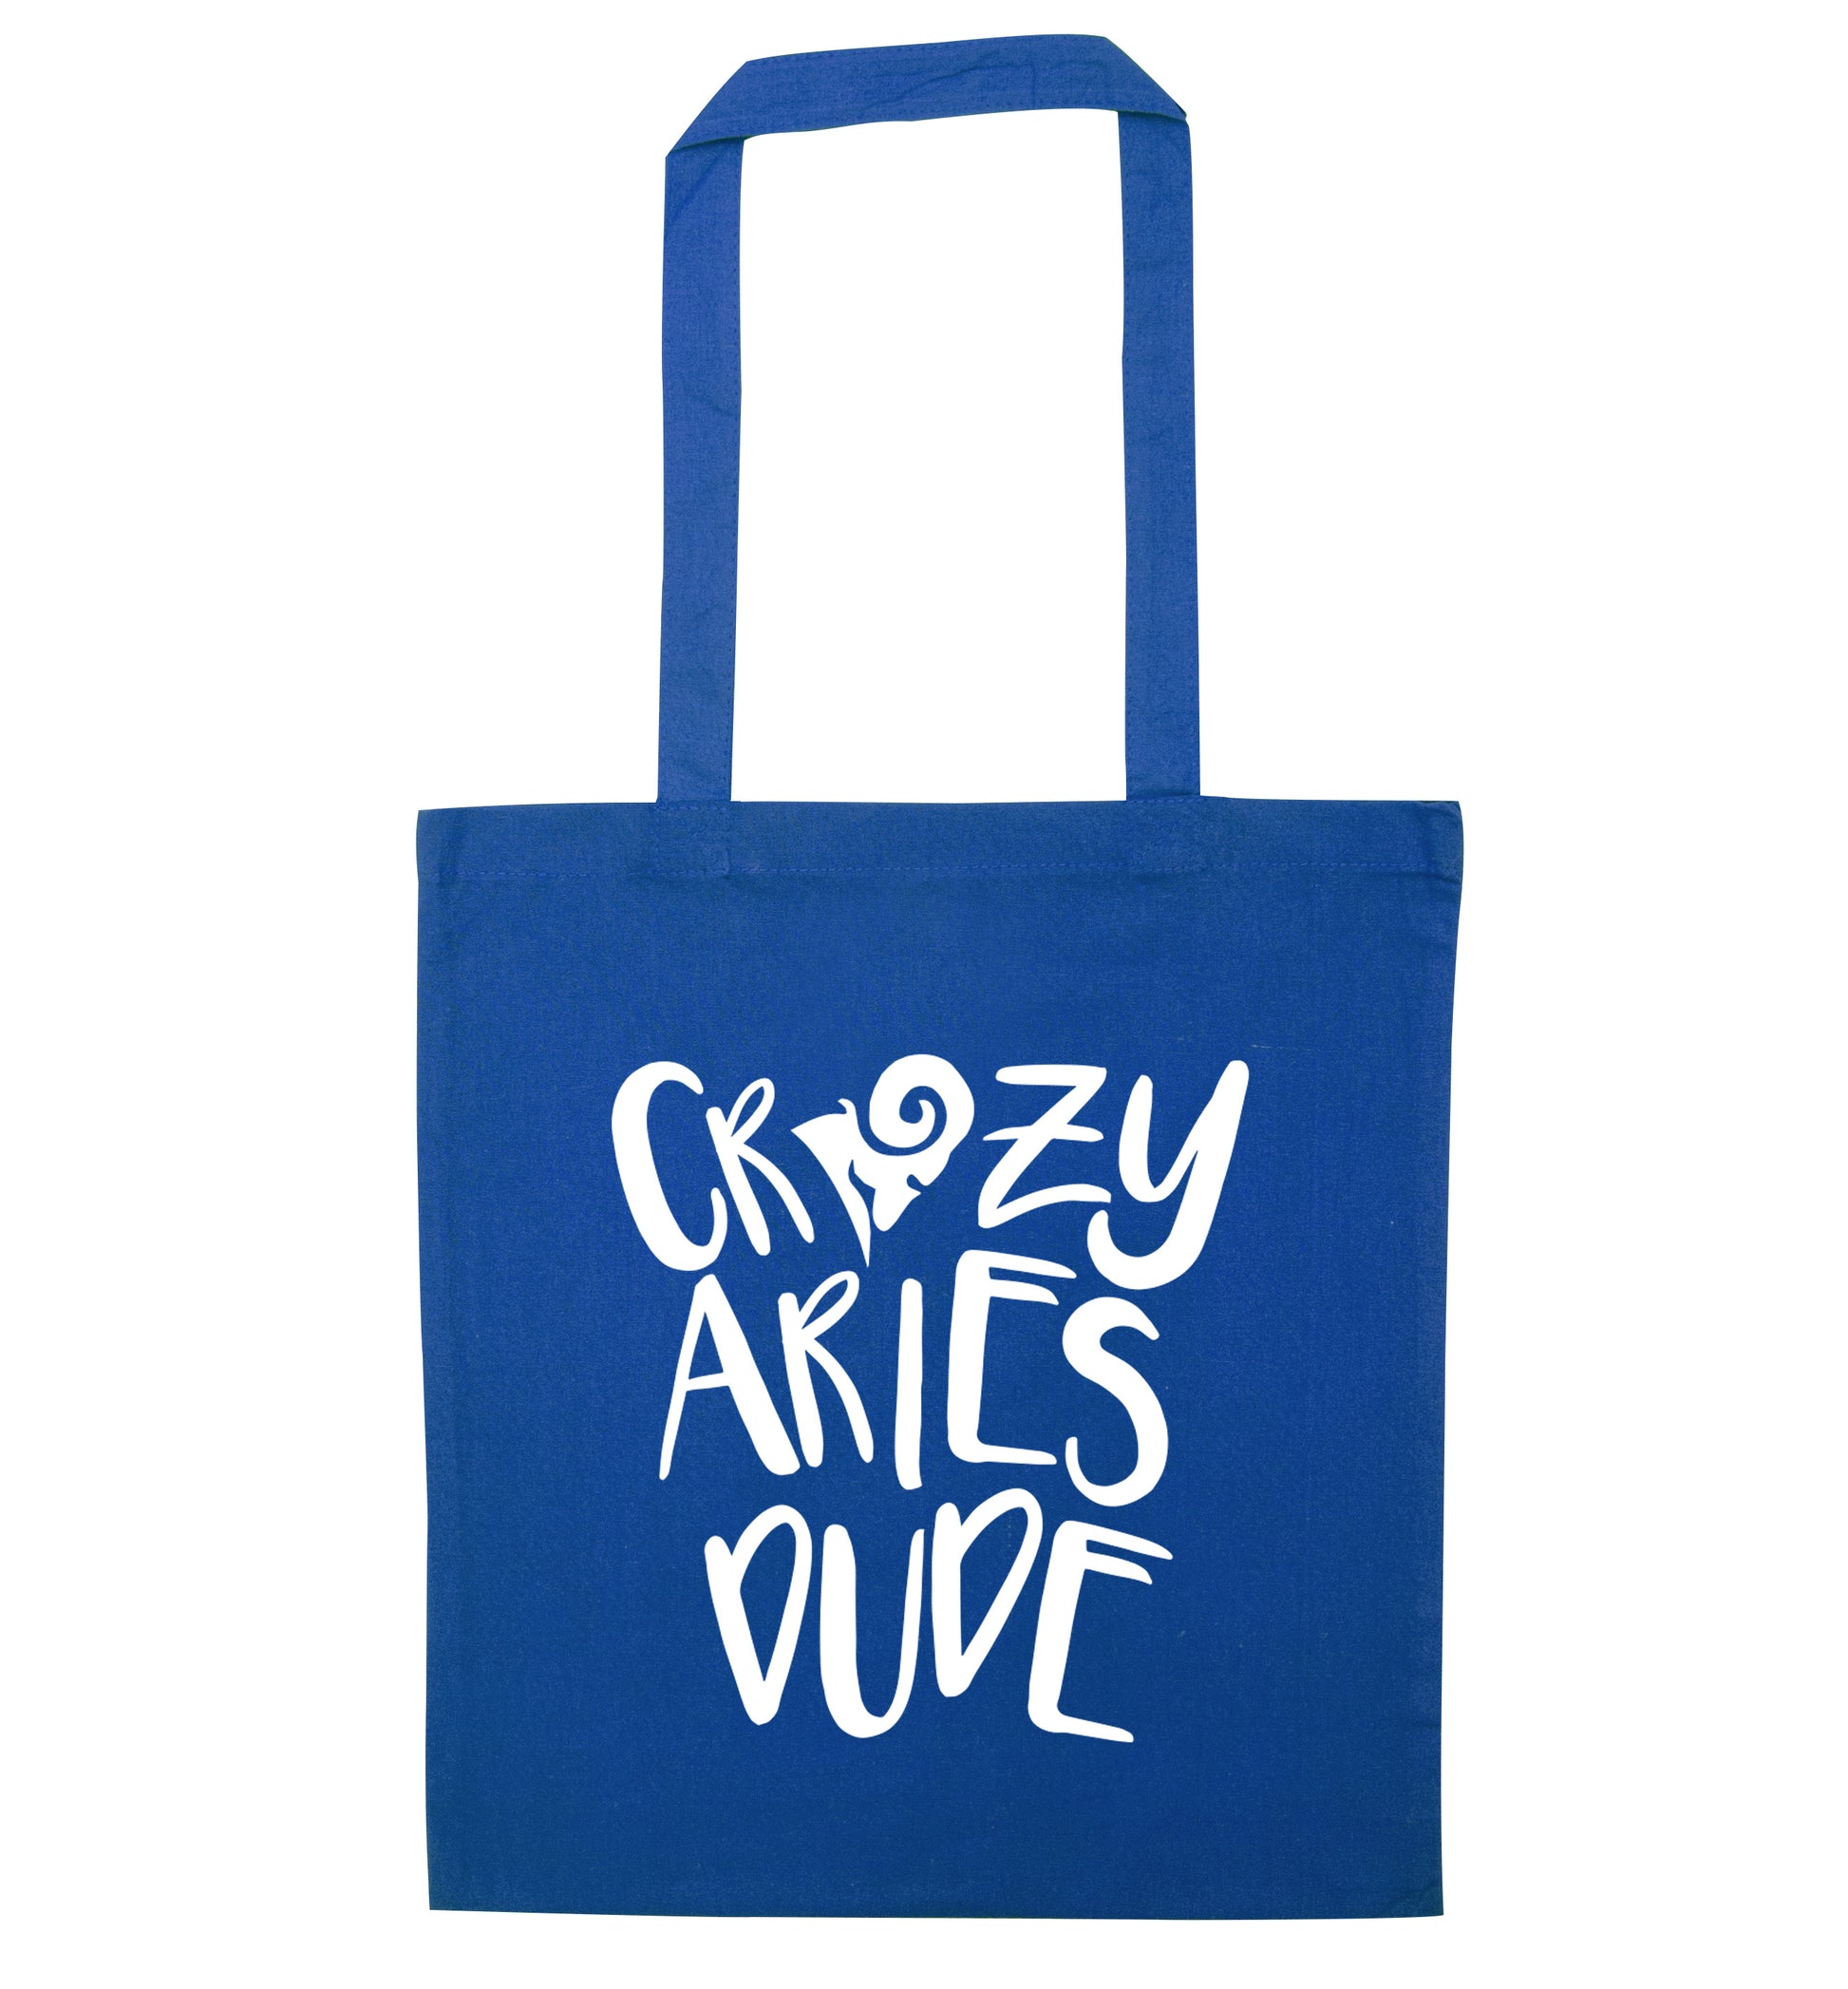 Crazy aries dude blue tote bag